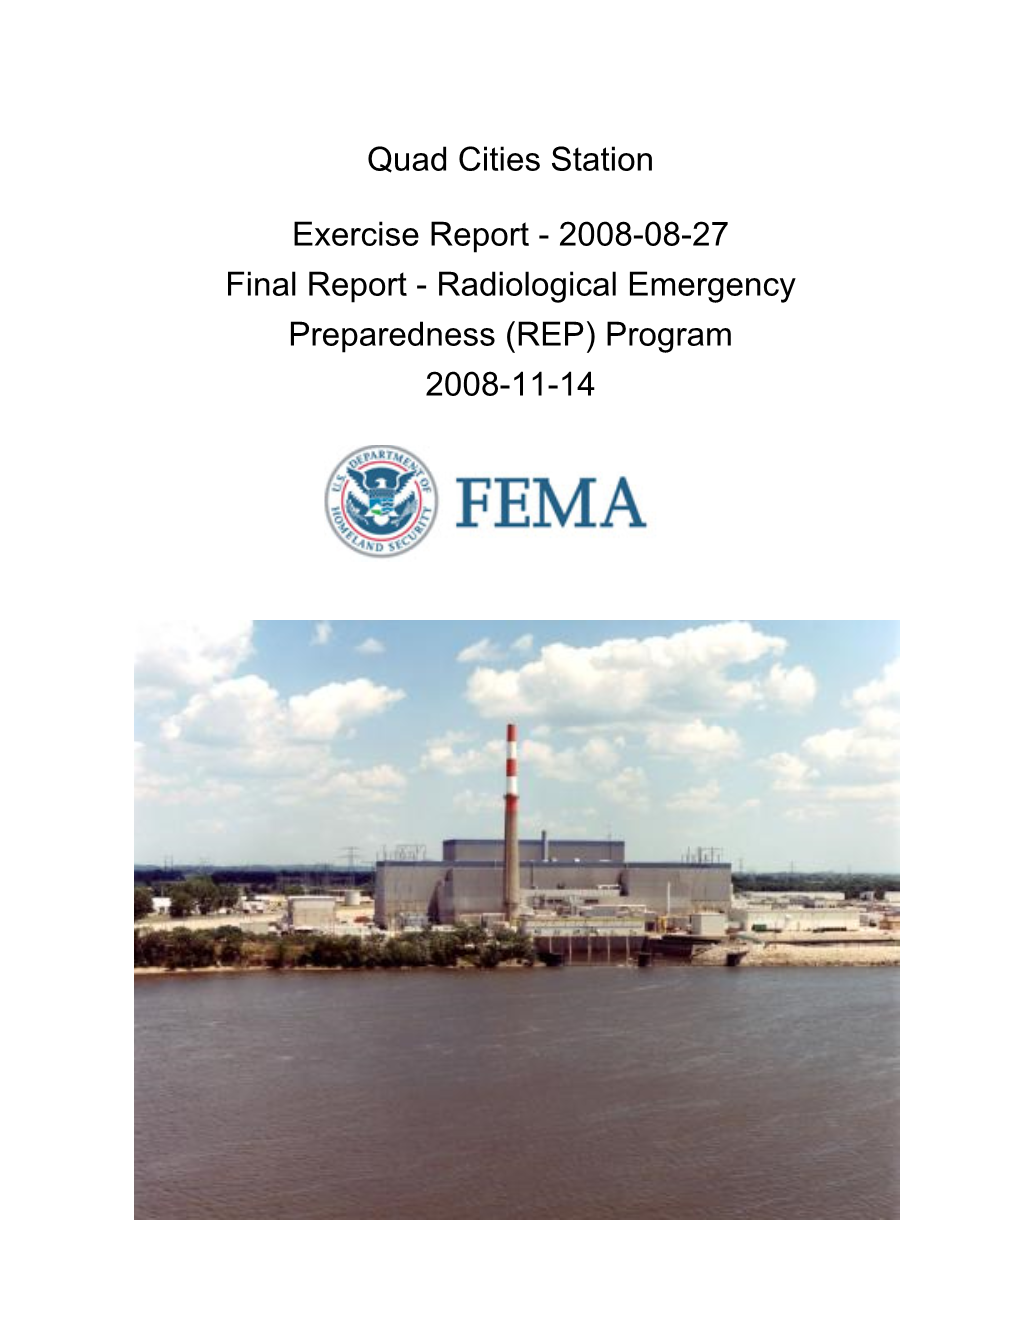 FEMA Quad Cities , Final Exercise Report, Exercise Date